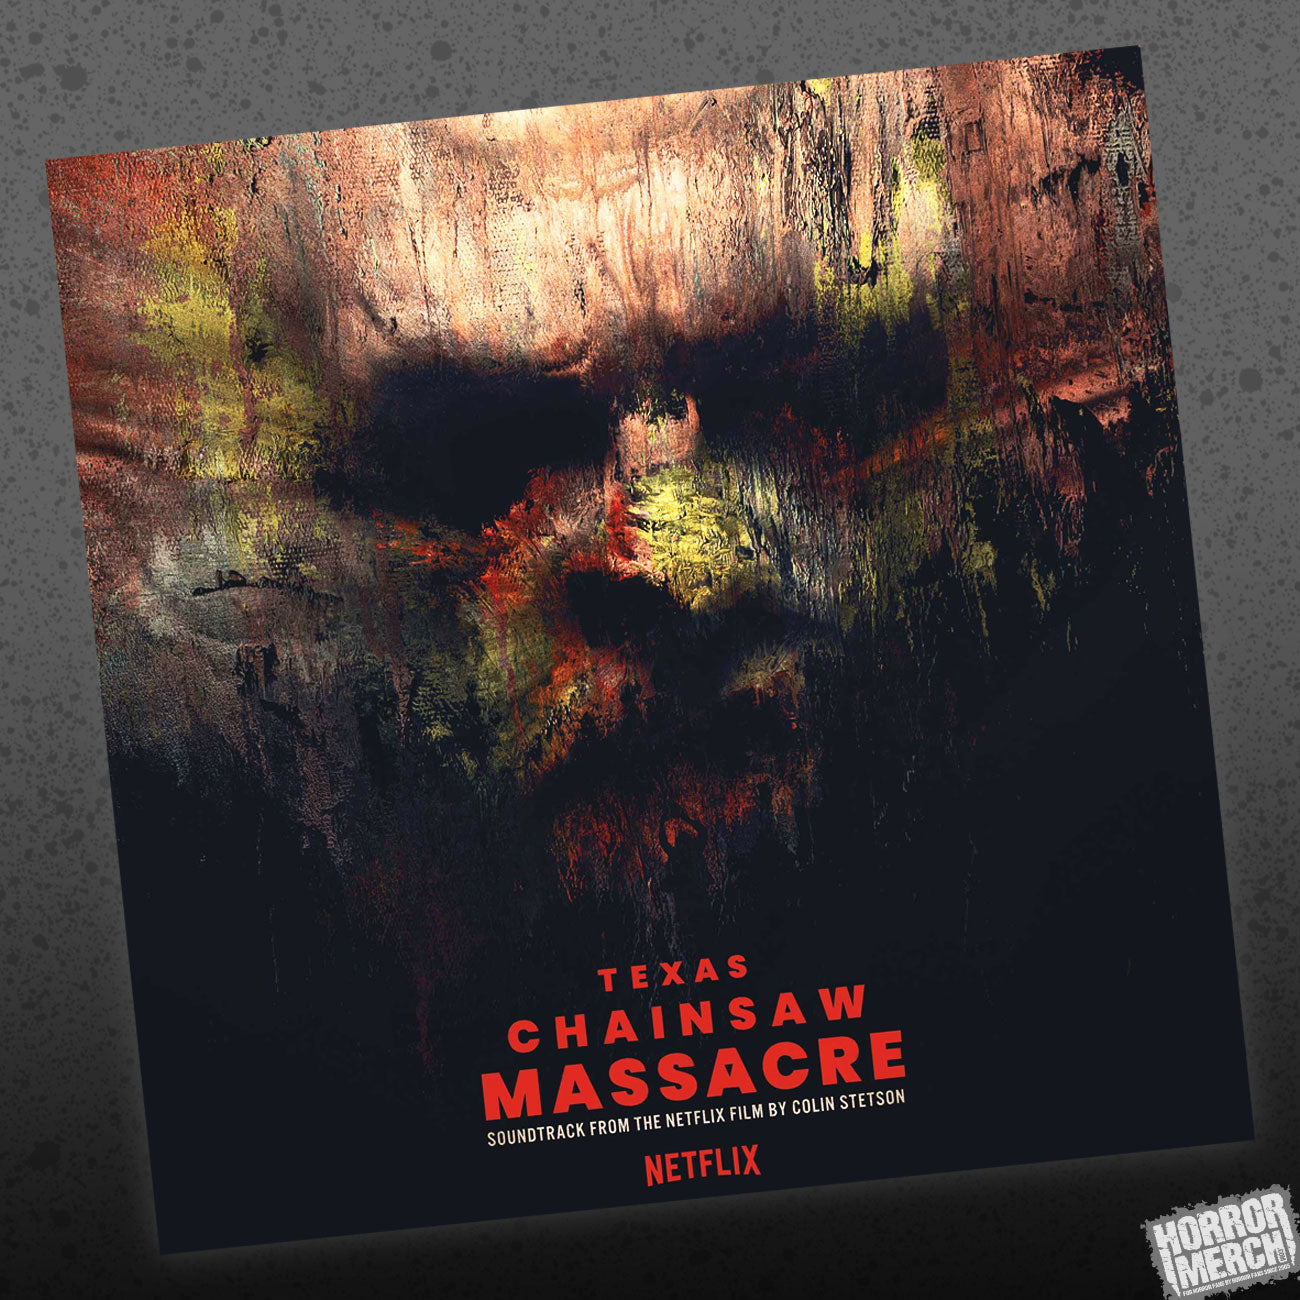 Texas Chainsaw Massacre [Soundtrack] - Free Shipping!